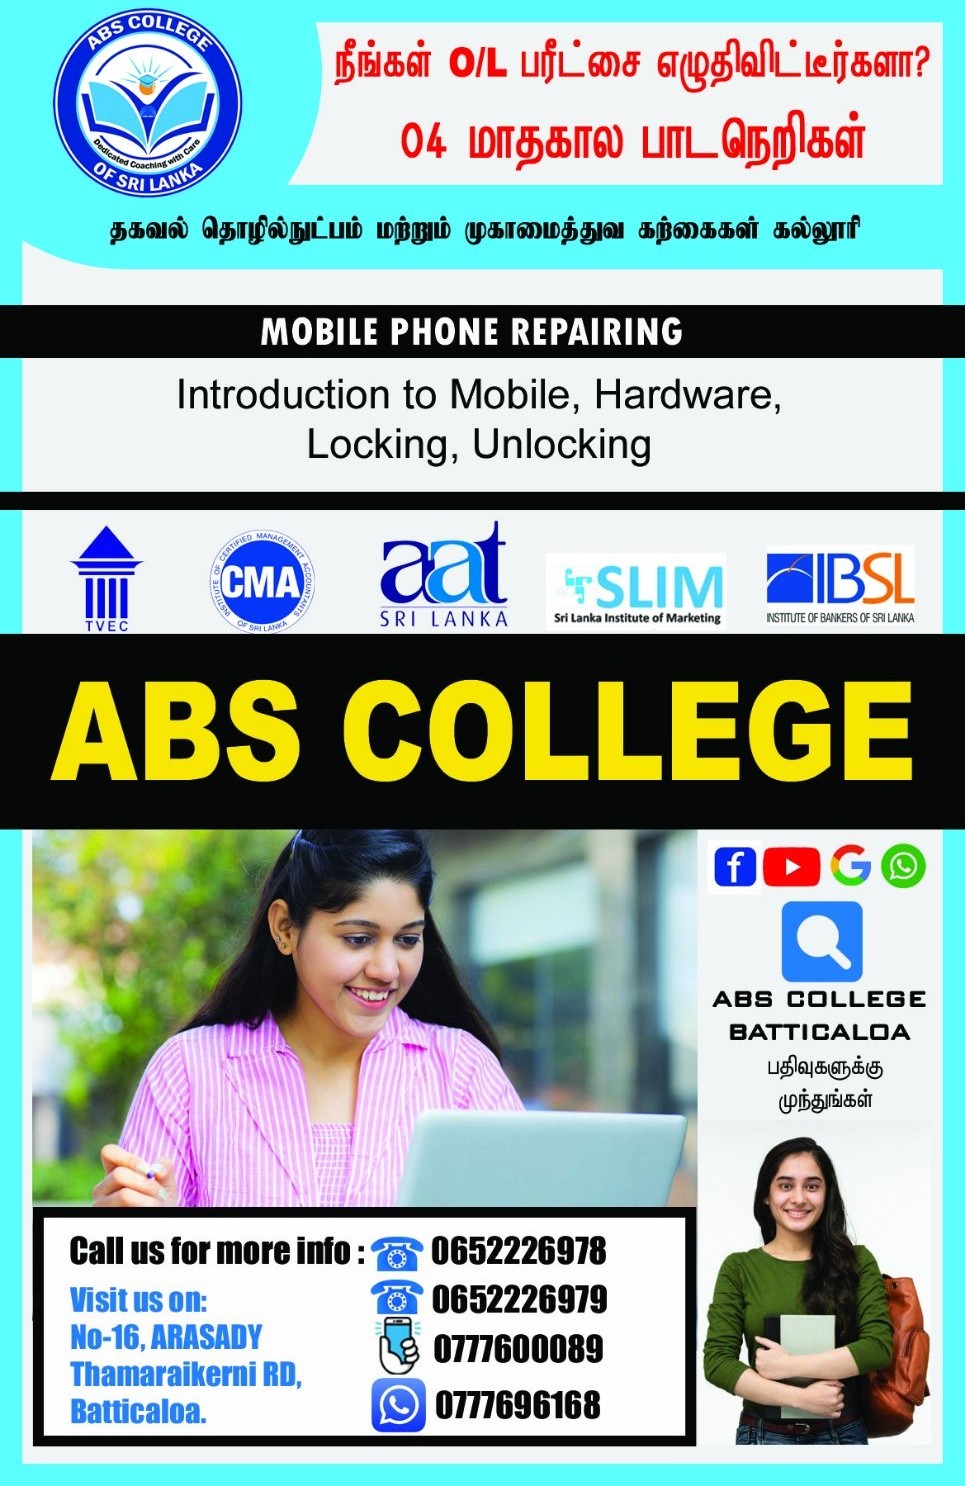 Mobile Phone Repairing Courses in ABS College Batticaloa Courses Details